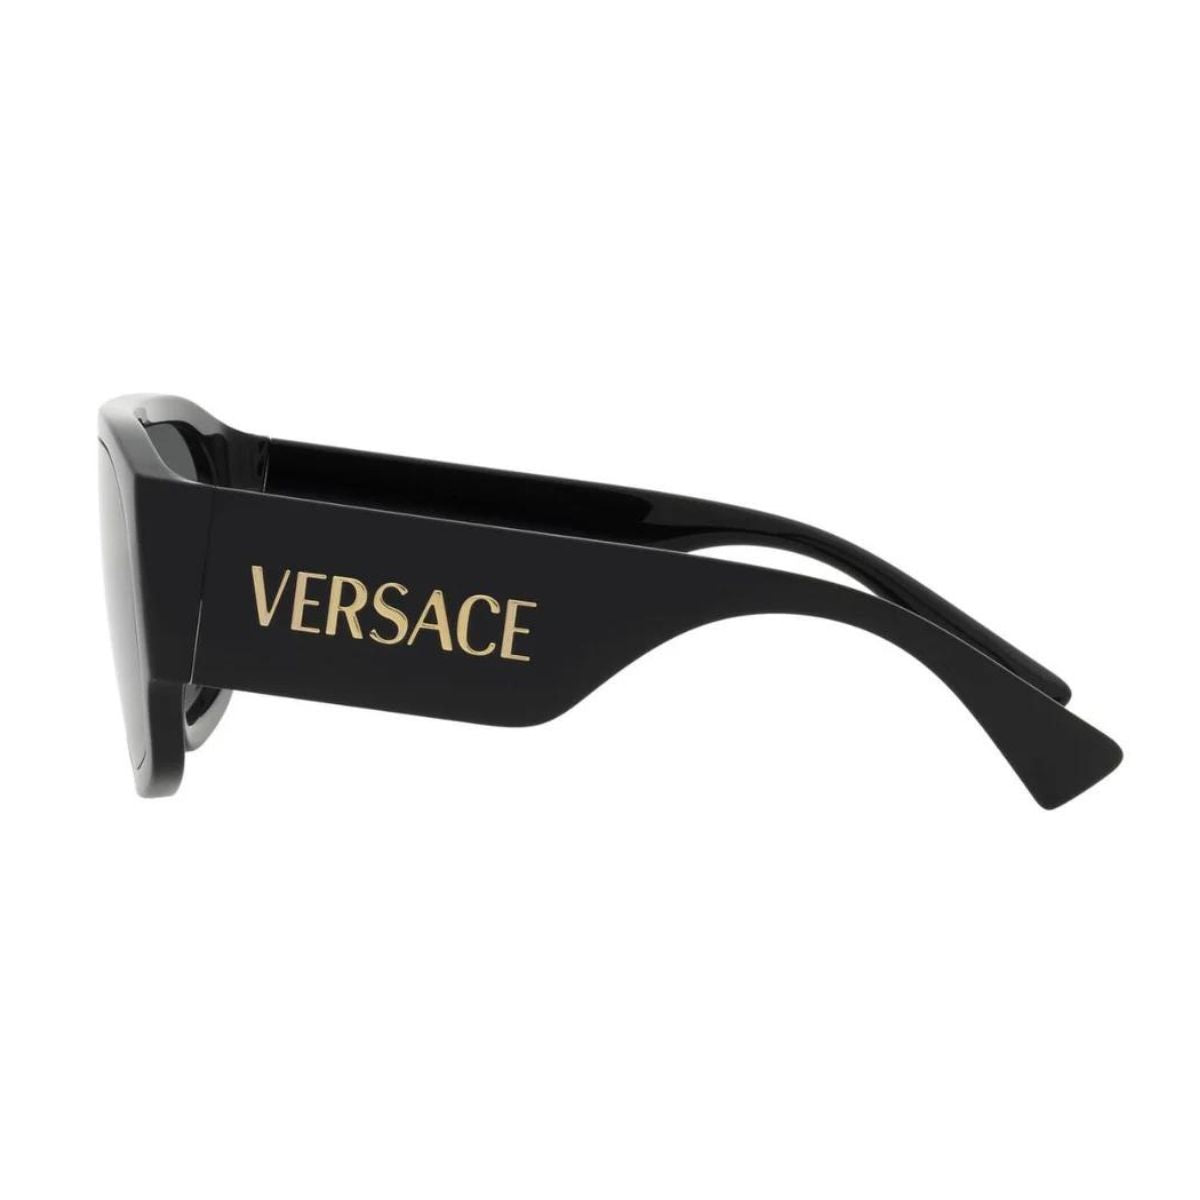 "Versace 4439 GB1/87 UV Protected Eyewear Sunglasses For Men And Women At Optorium"